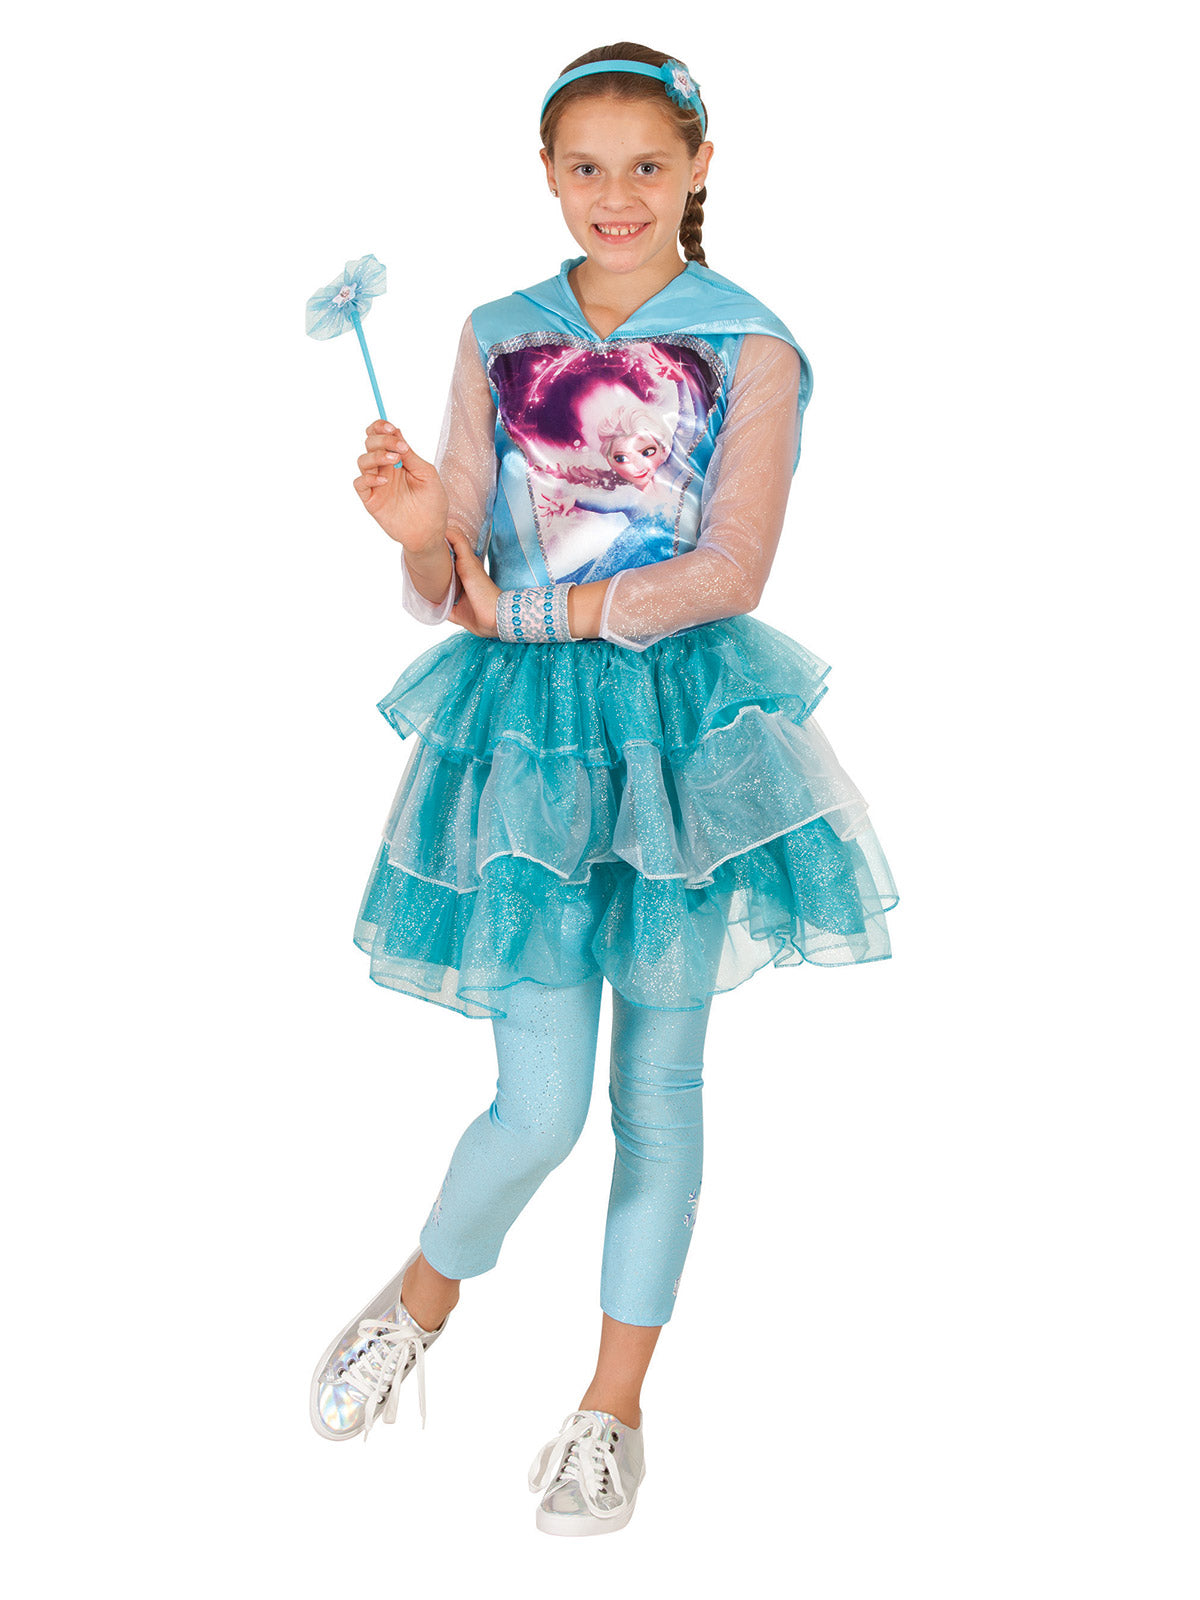 Frozen Elsa Fabric Wrist Band child Girls Costume Accessory